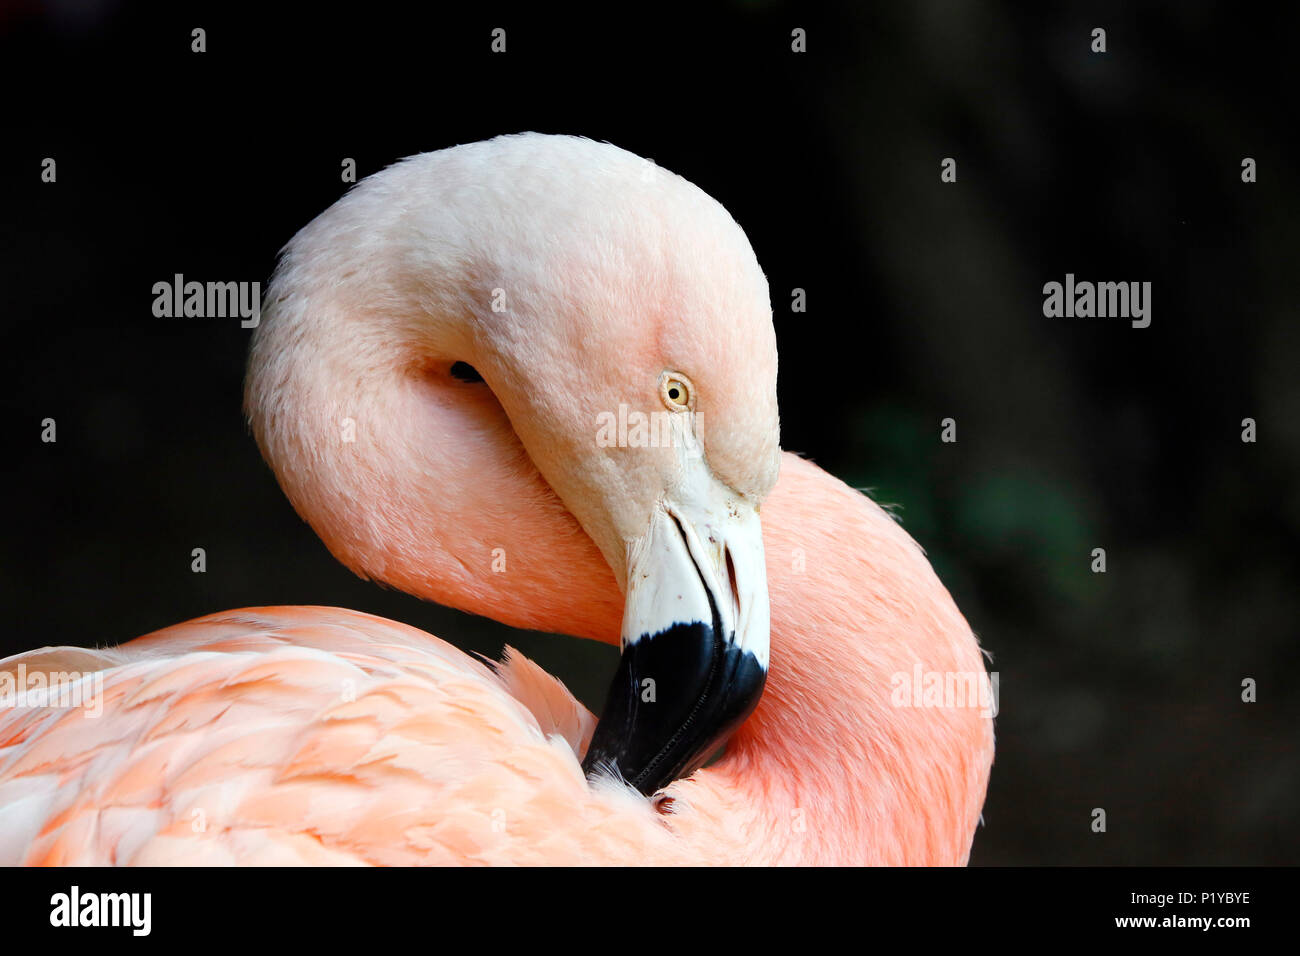 Bolivia. Altiplano. Laguna colorada. Close-up on a pink flamingo of Chile (Phoenicopterus chilensis). Stock Photo